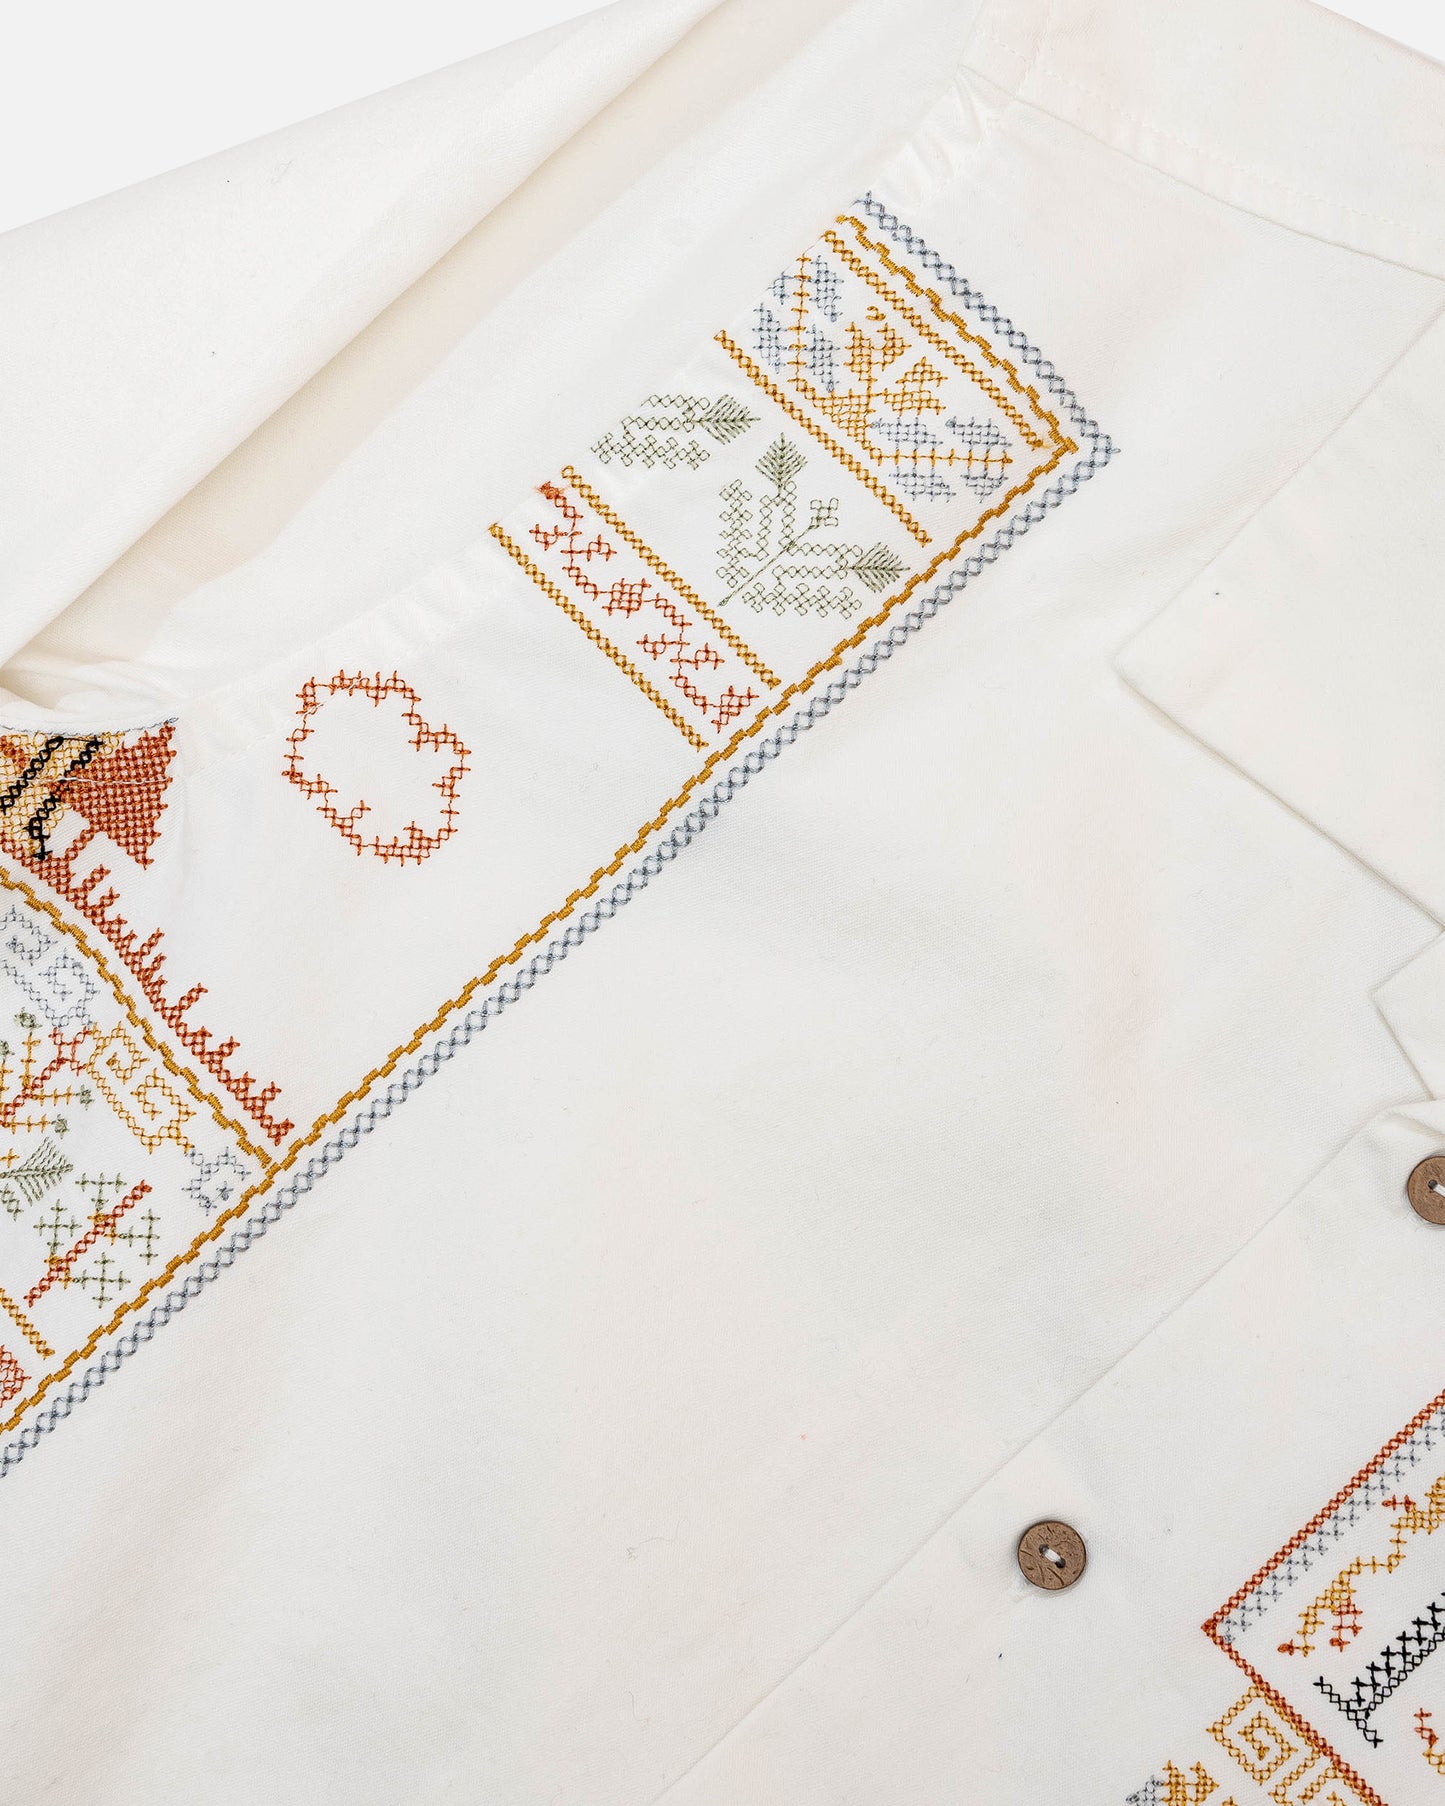 Percival Tapestry White Long Sleeve Cuban Shirt